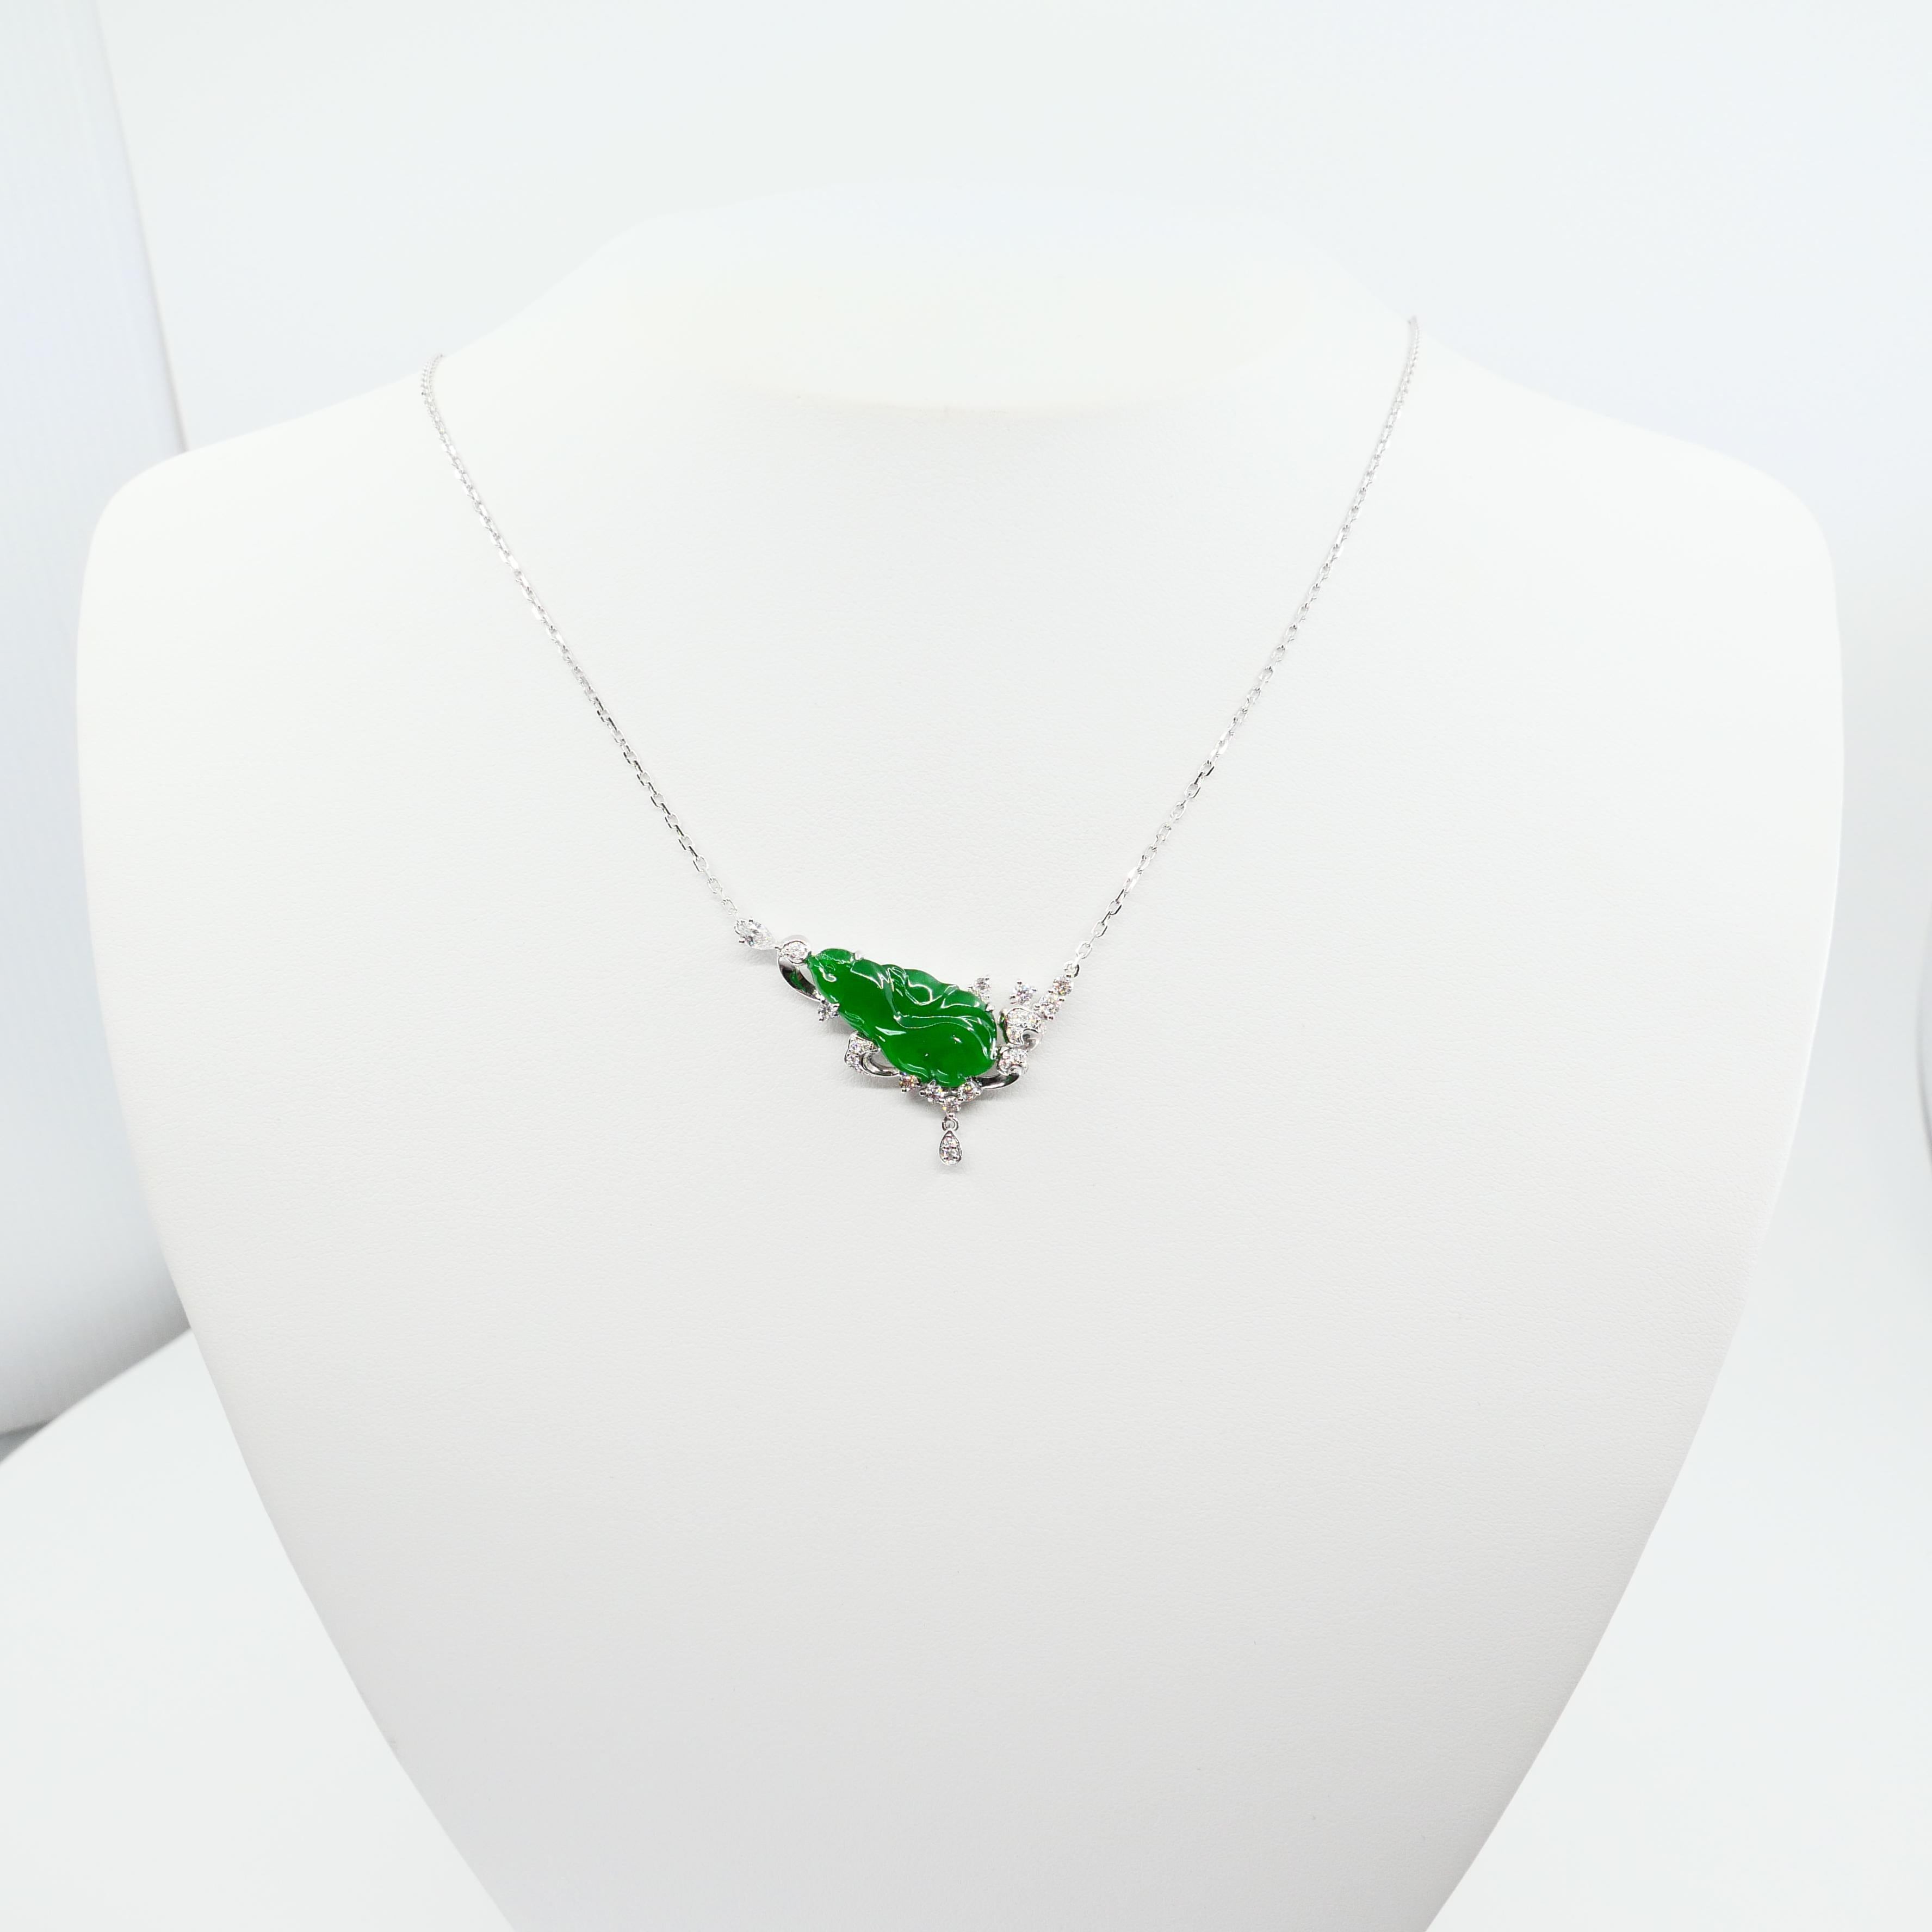 Women's Certified Type A Jadeite Jade Diamond Pendant Drop Necklace, Imperial Green For Sale